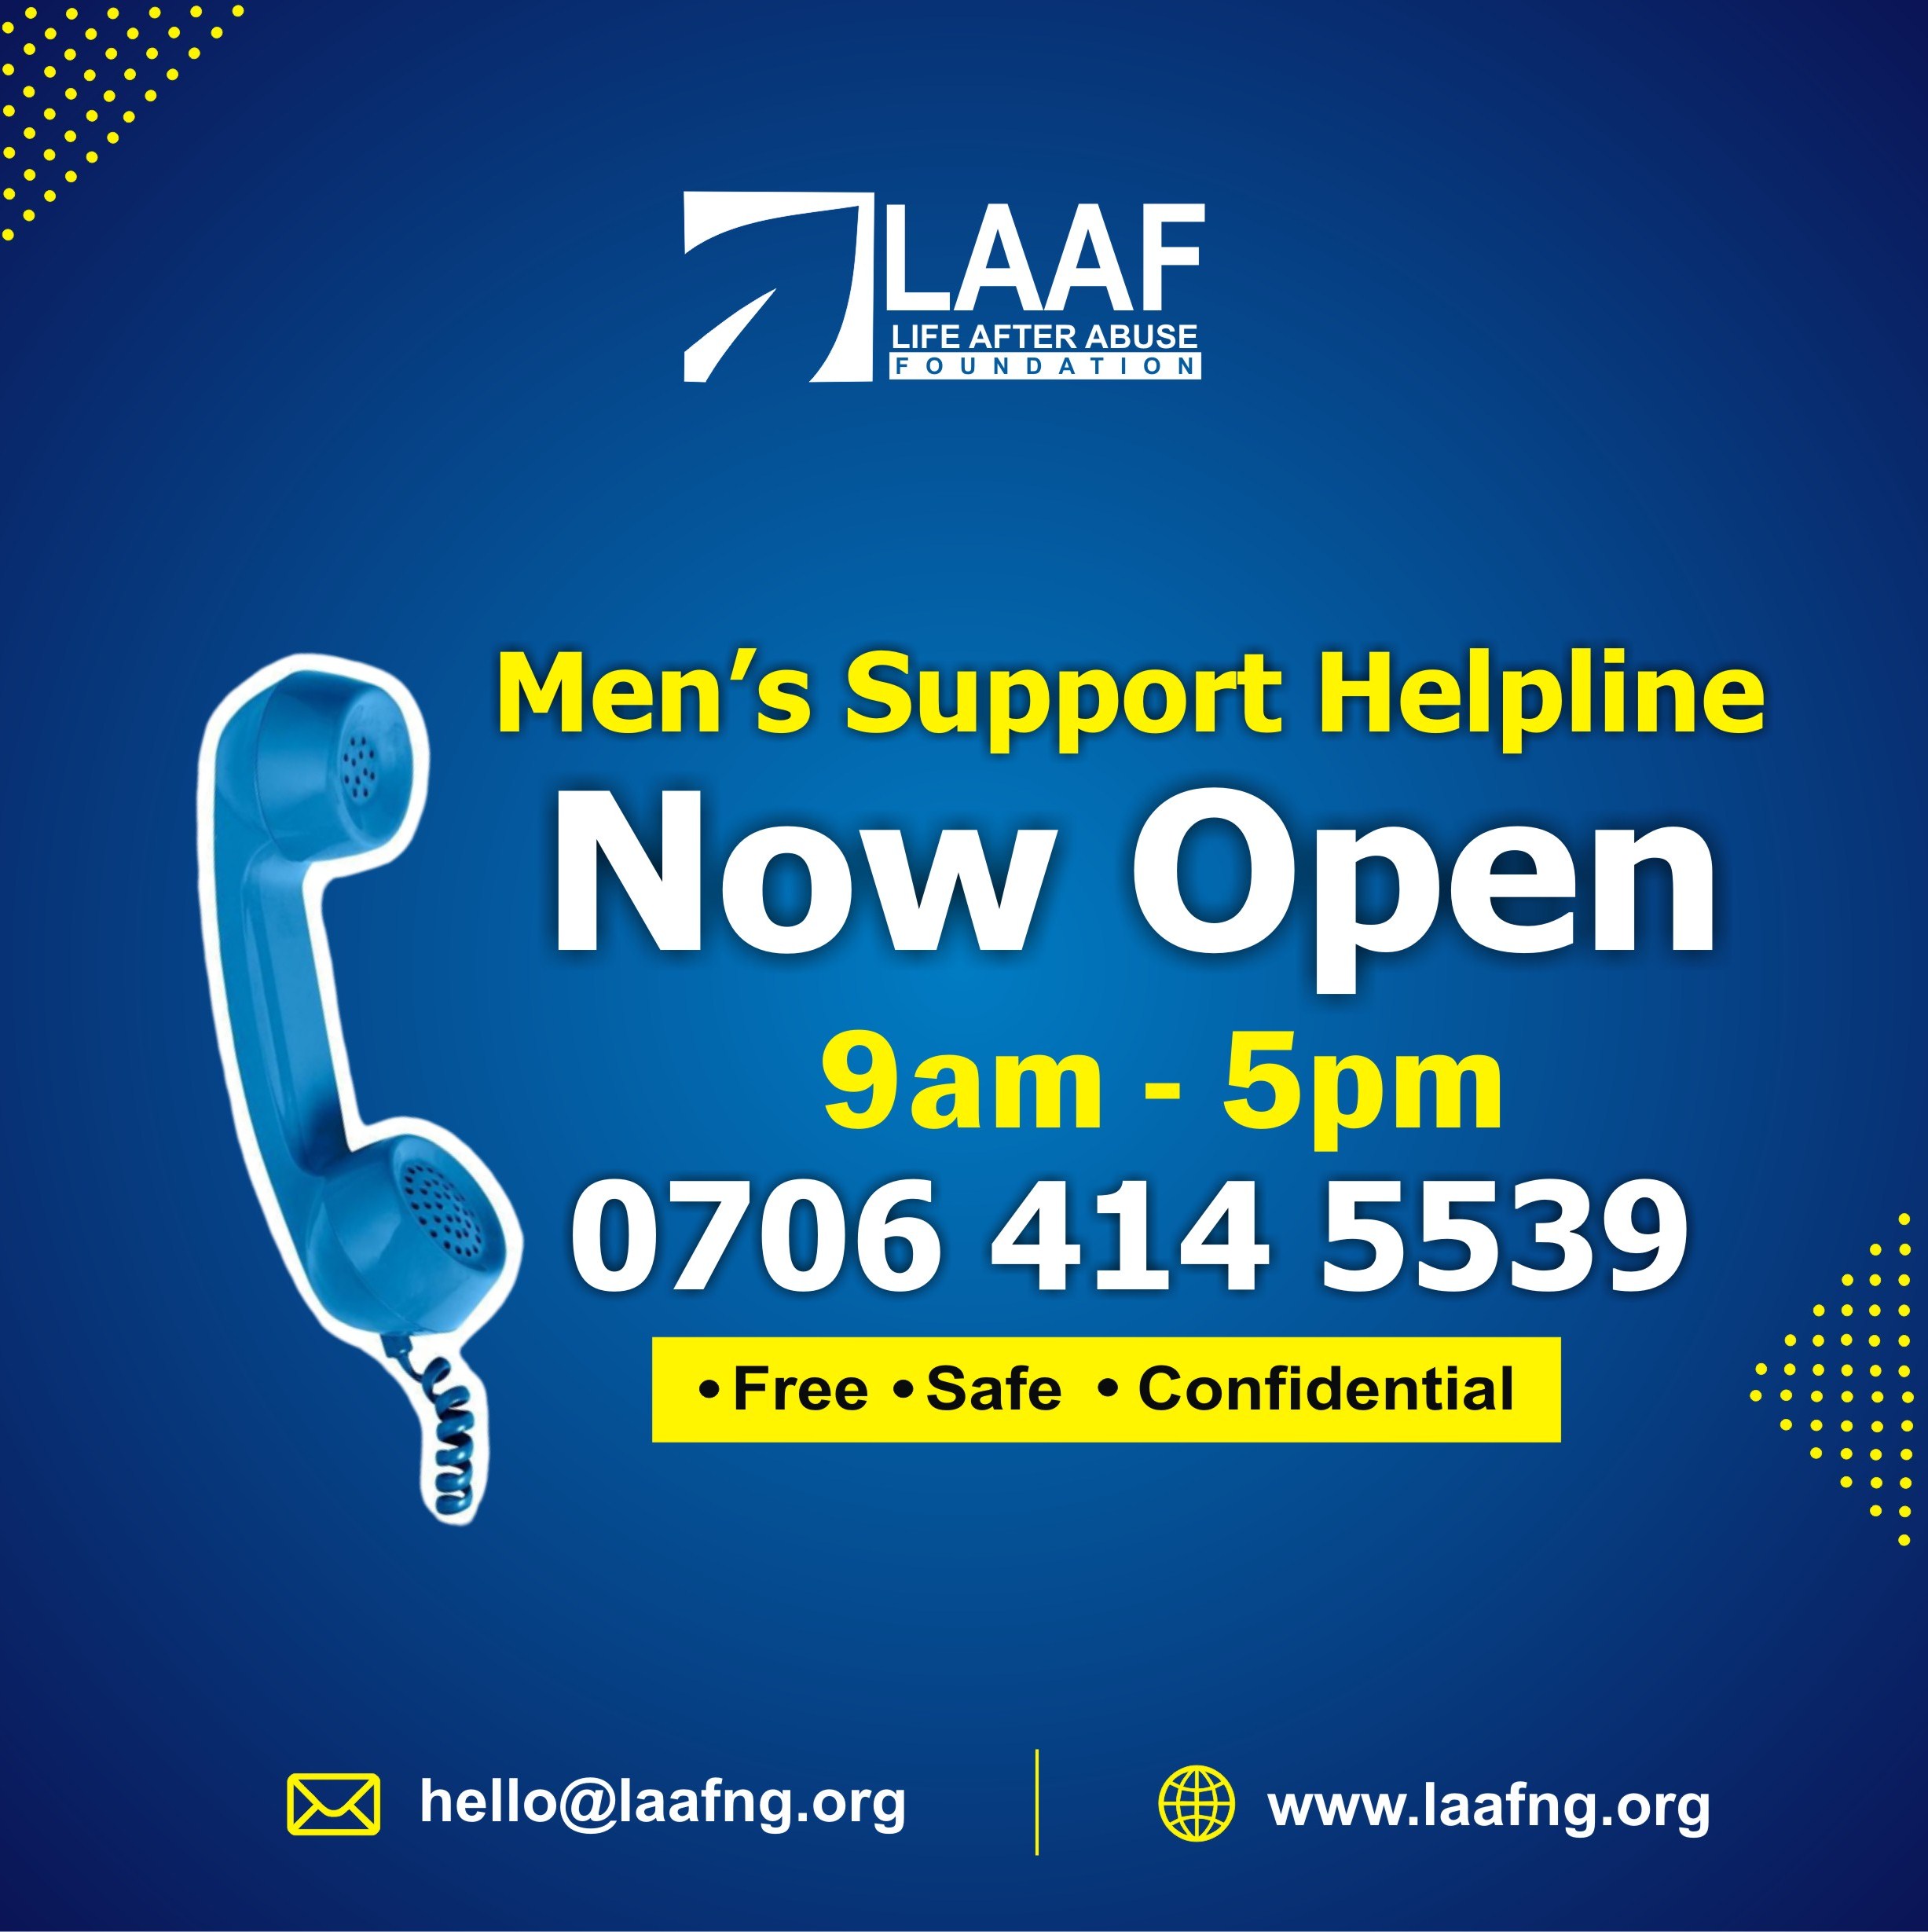 Life After Abuse Foundation - men's support helpline